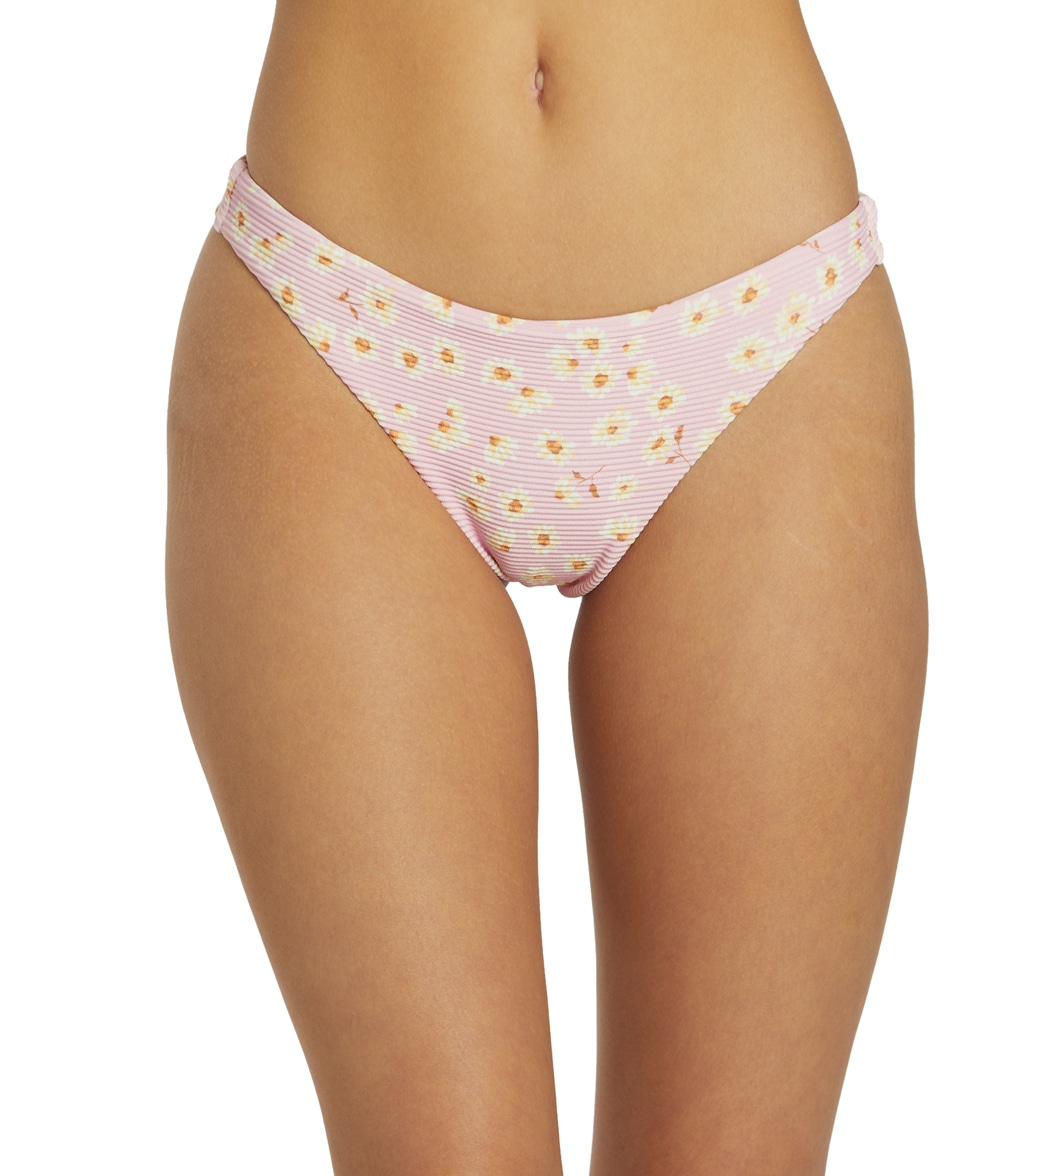 Billabong Women's Daisy Craze Tanga Bikini Bottom - Pink Lady Large - Swimoutlet.com